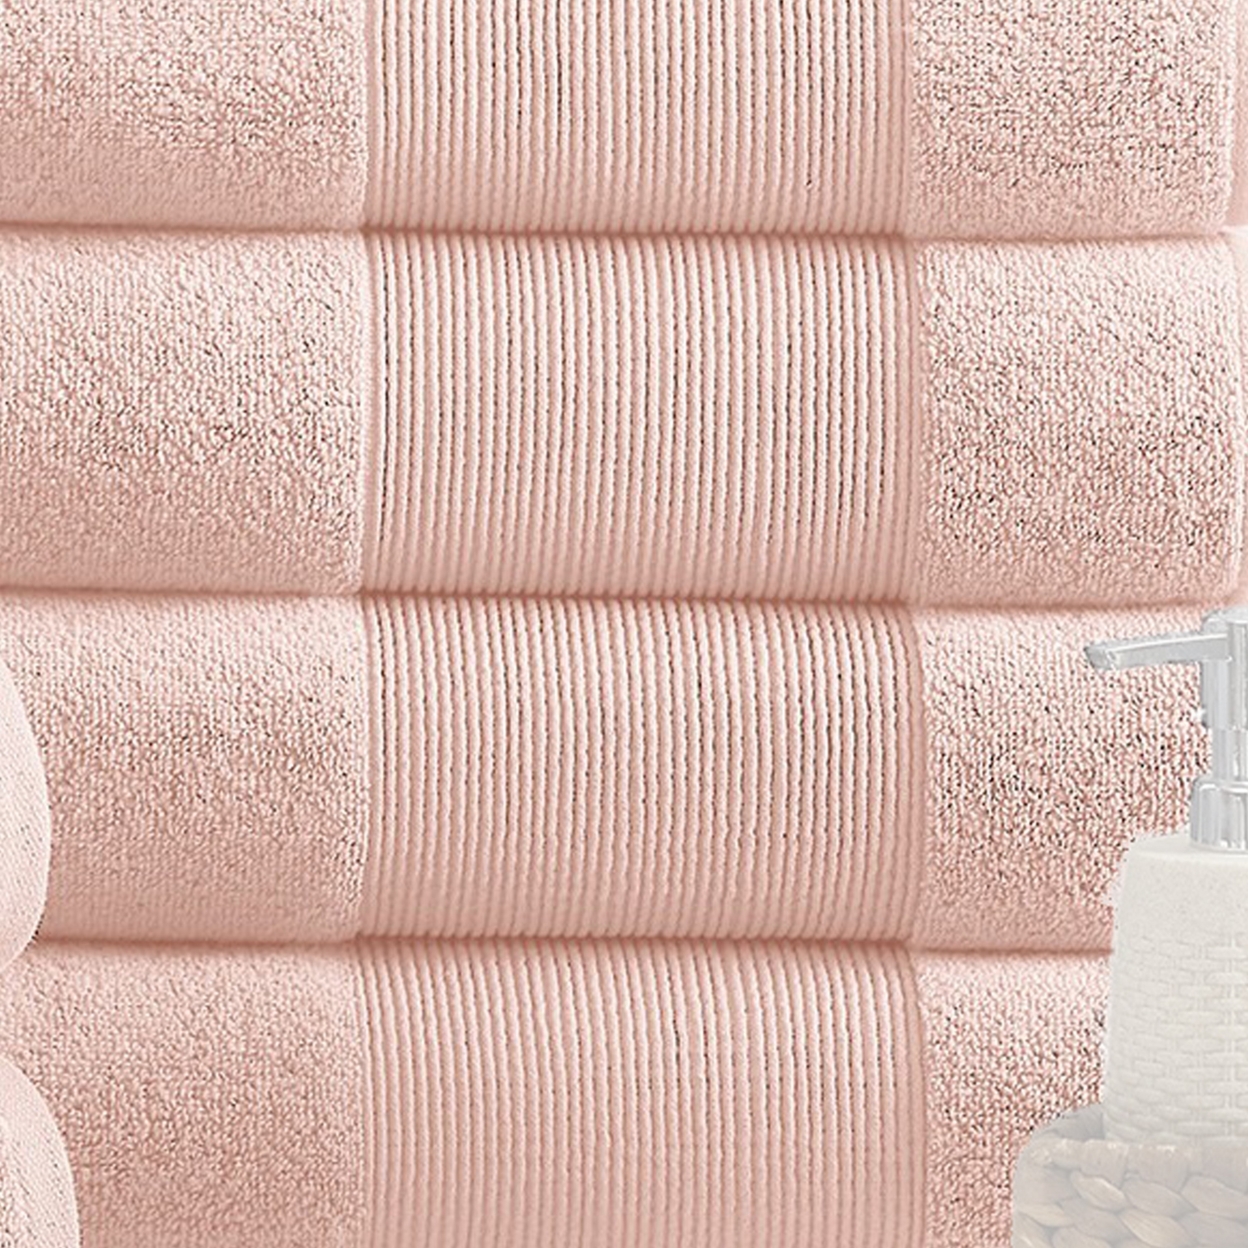 Lyra 18 Piece Ultra Soft Towel Set, Absorbent Textured Cotton, Blush Pink- Saltoro Sherpi